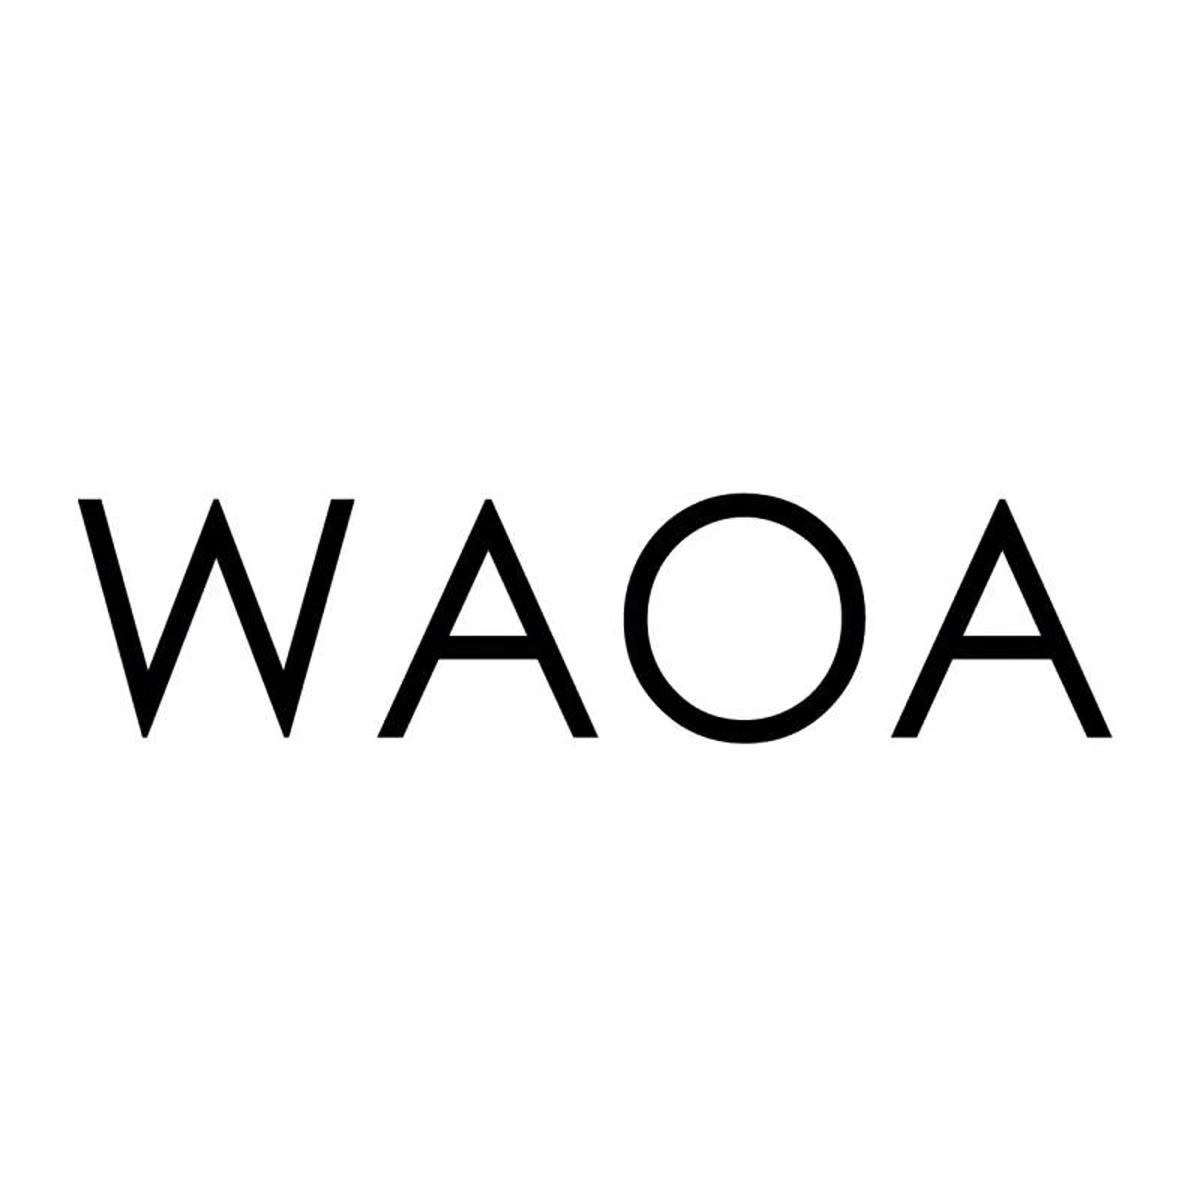 WAOA手笼商标转让费用买卖交易流程